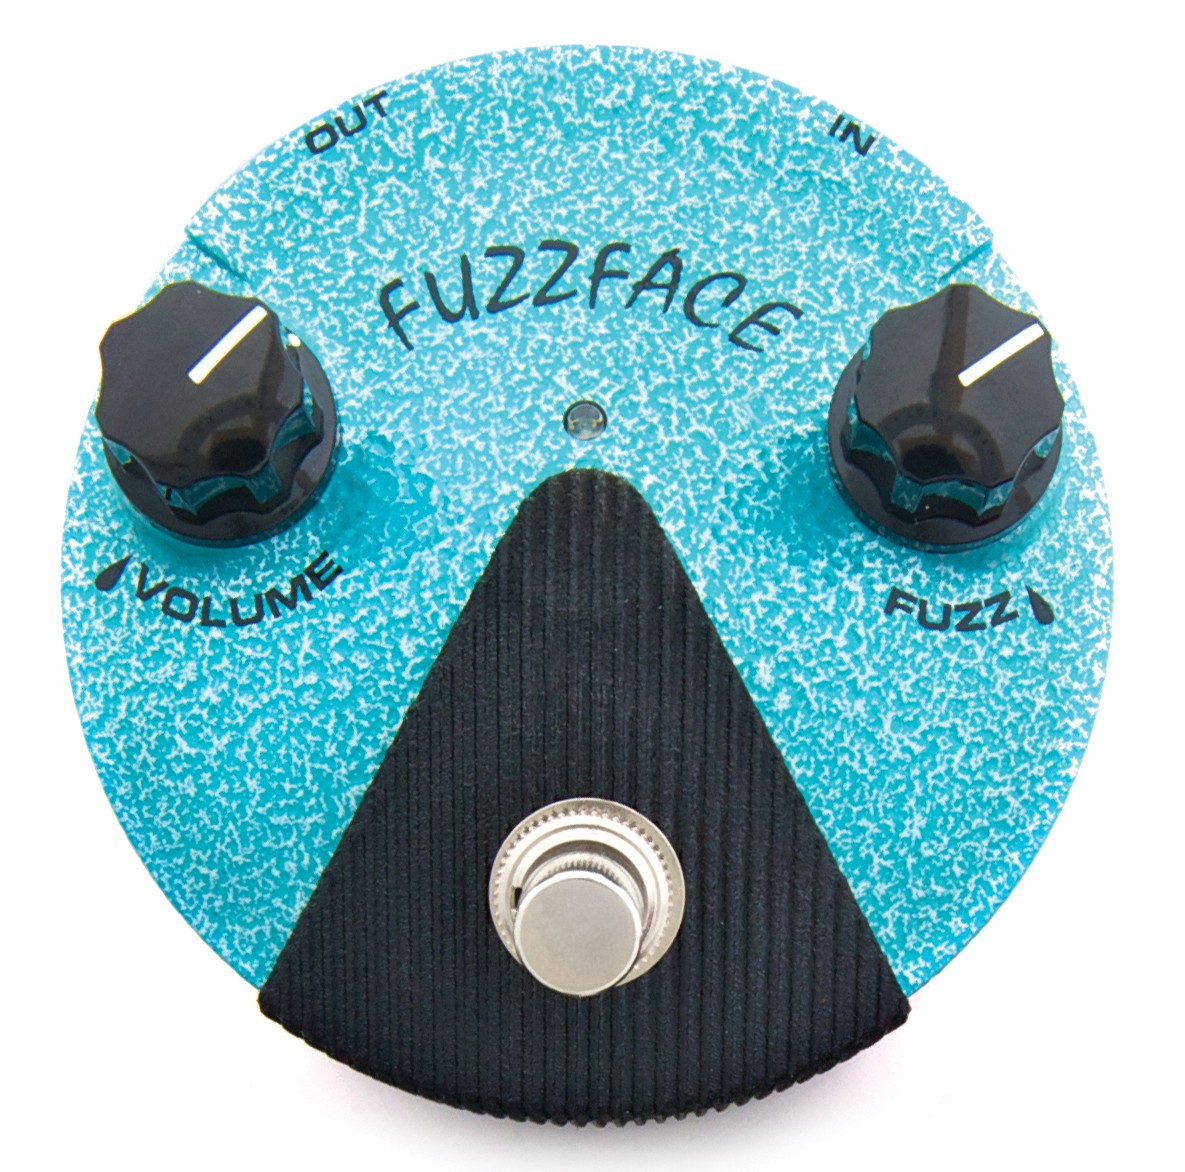 Dunlop FFM3 Fuzz Face Mini